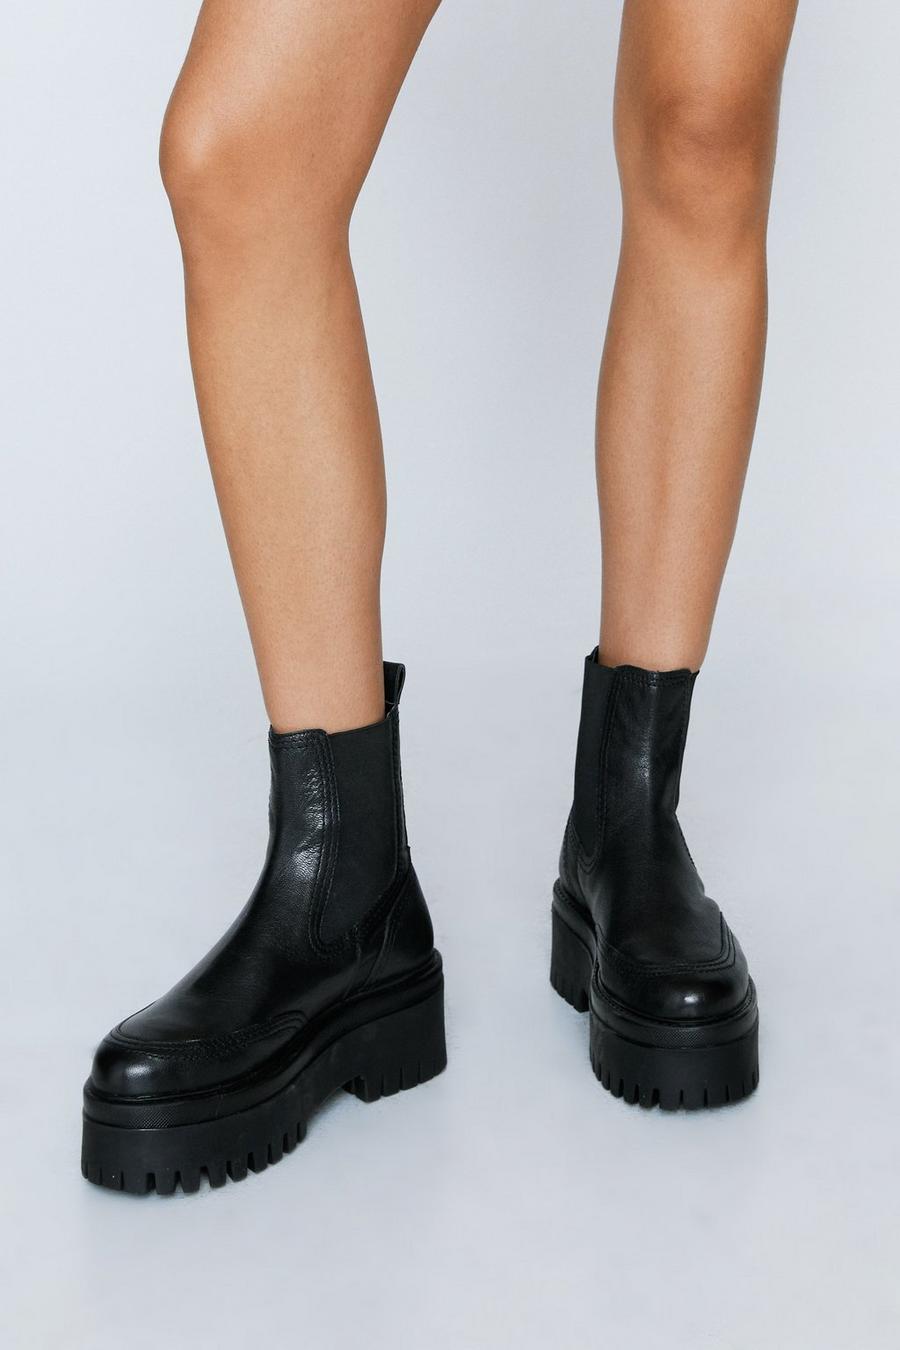 Stella McCartney Chelsea Boots \u201eEmilie Boots\u201c nude Shoes Boots Chelsea Boots 